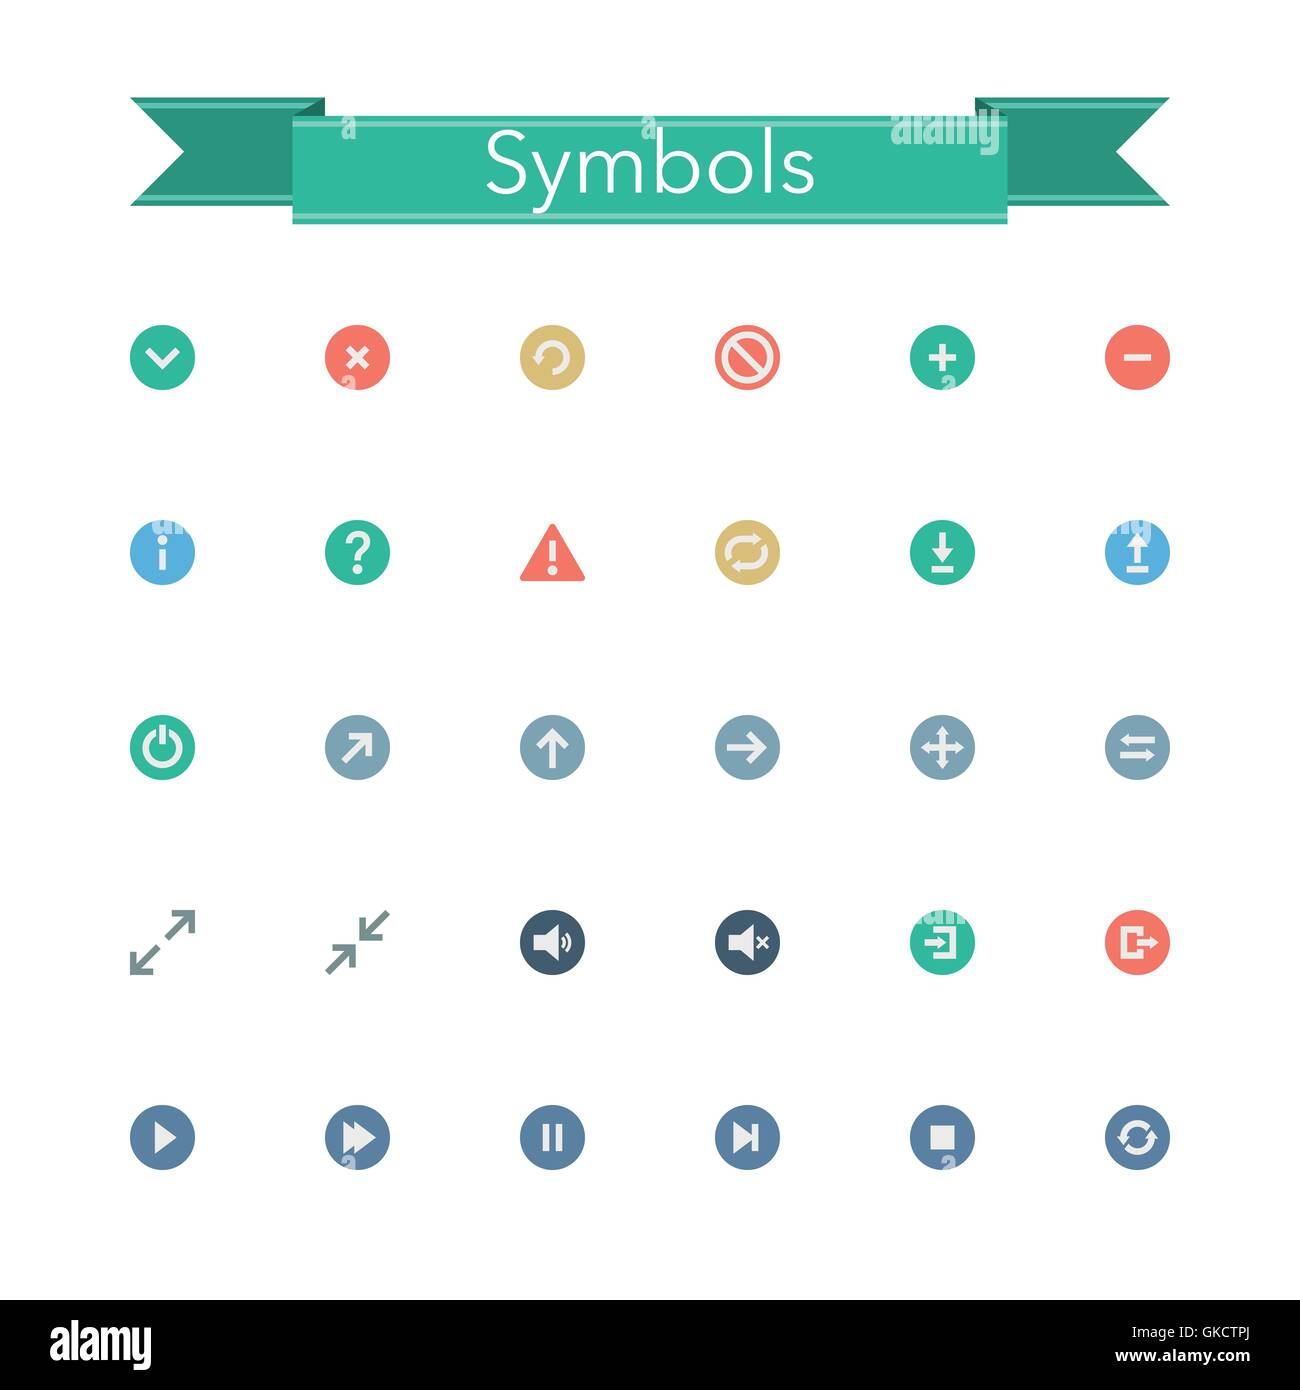 Symbols Flat Icons Stock Vector